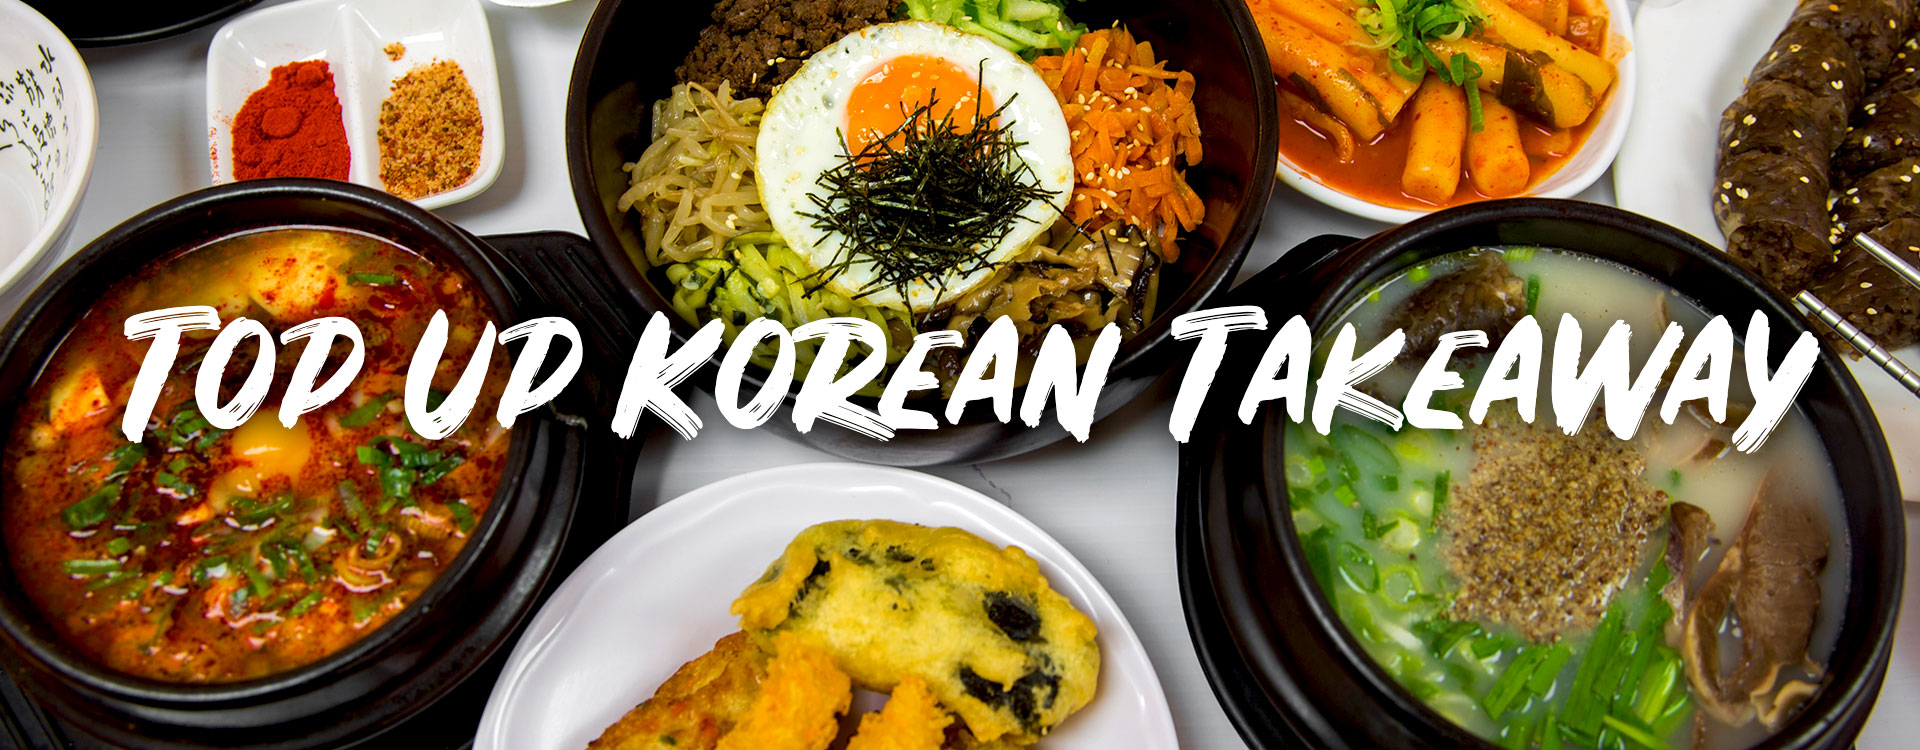 Top-Up Korean Takeaway Restaurant - Sunnybank - Brisbane authentic